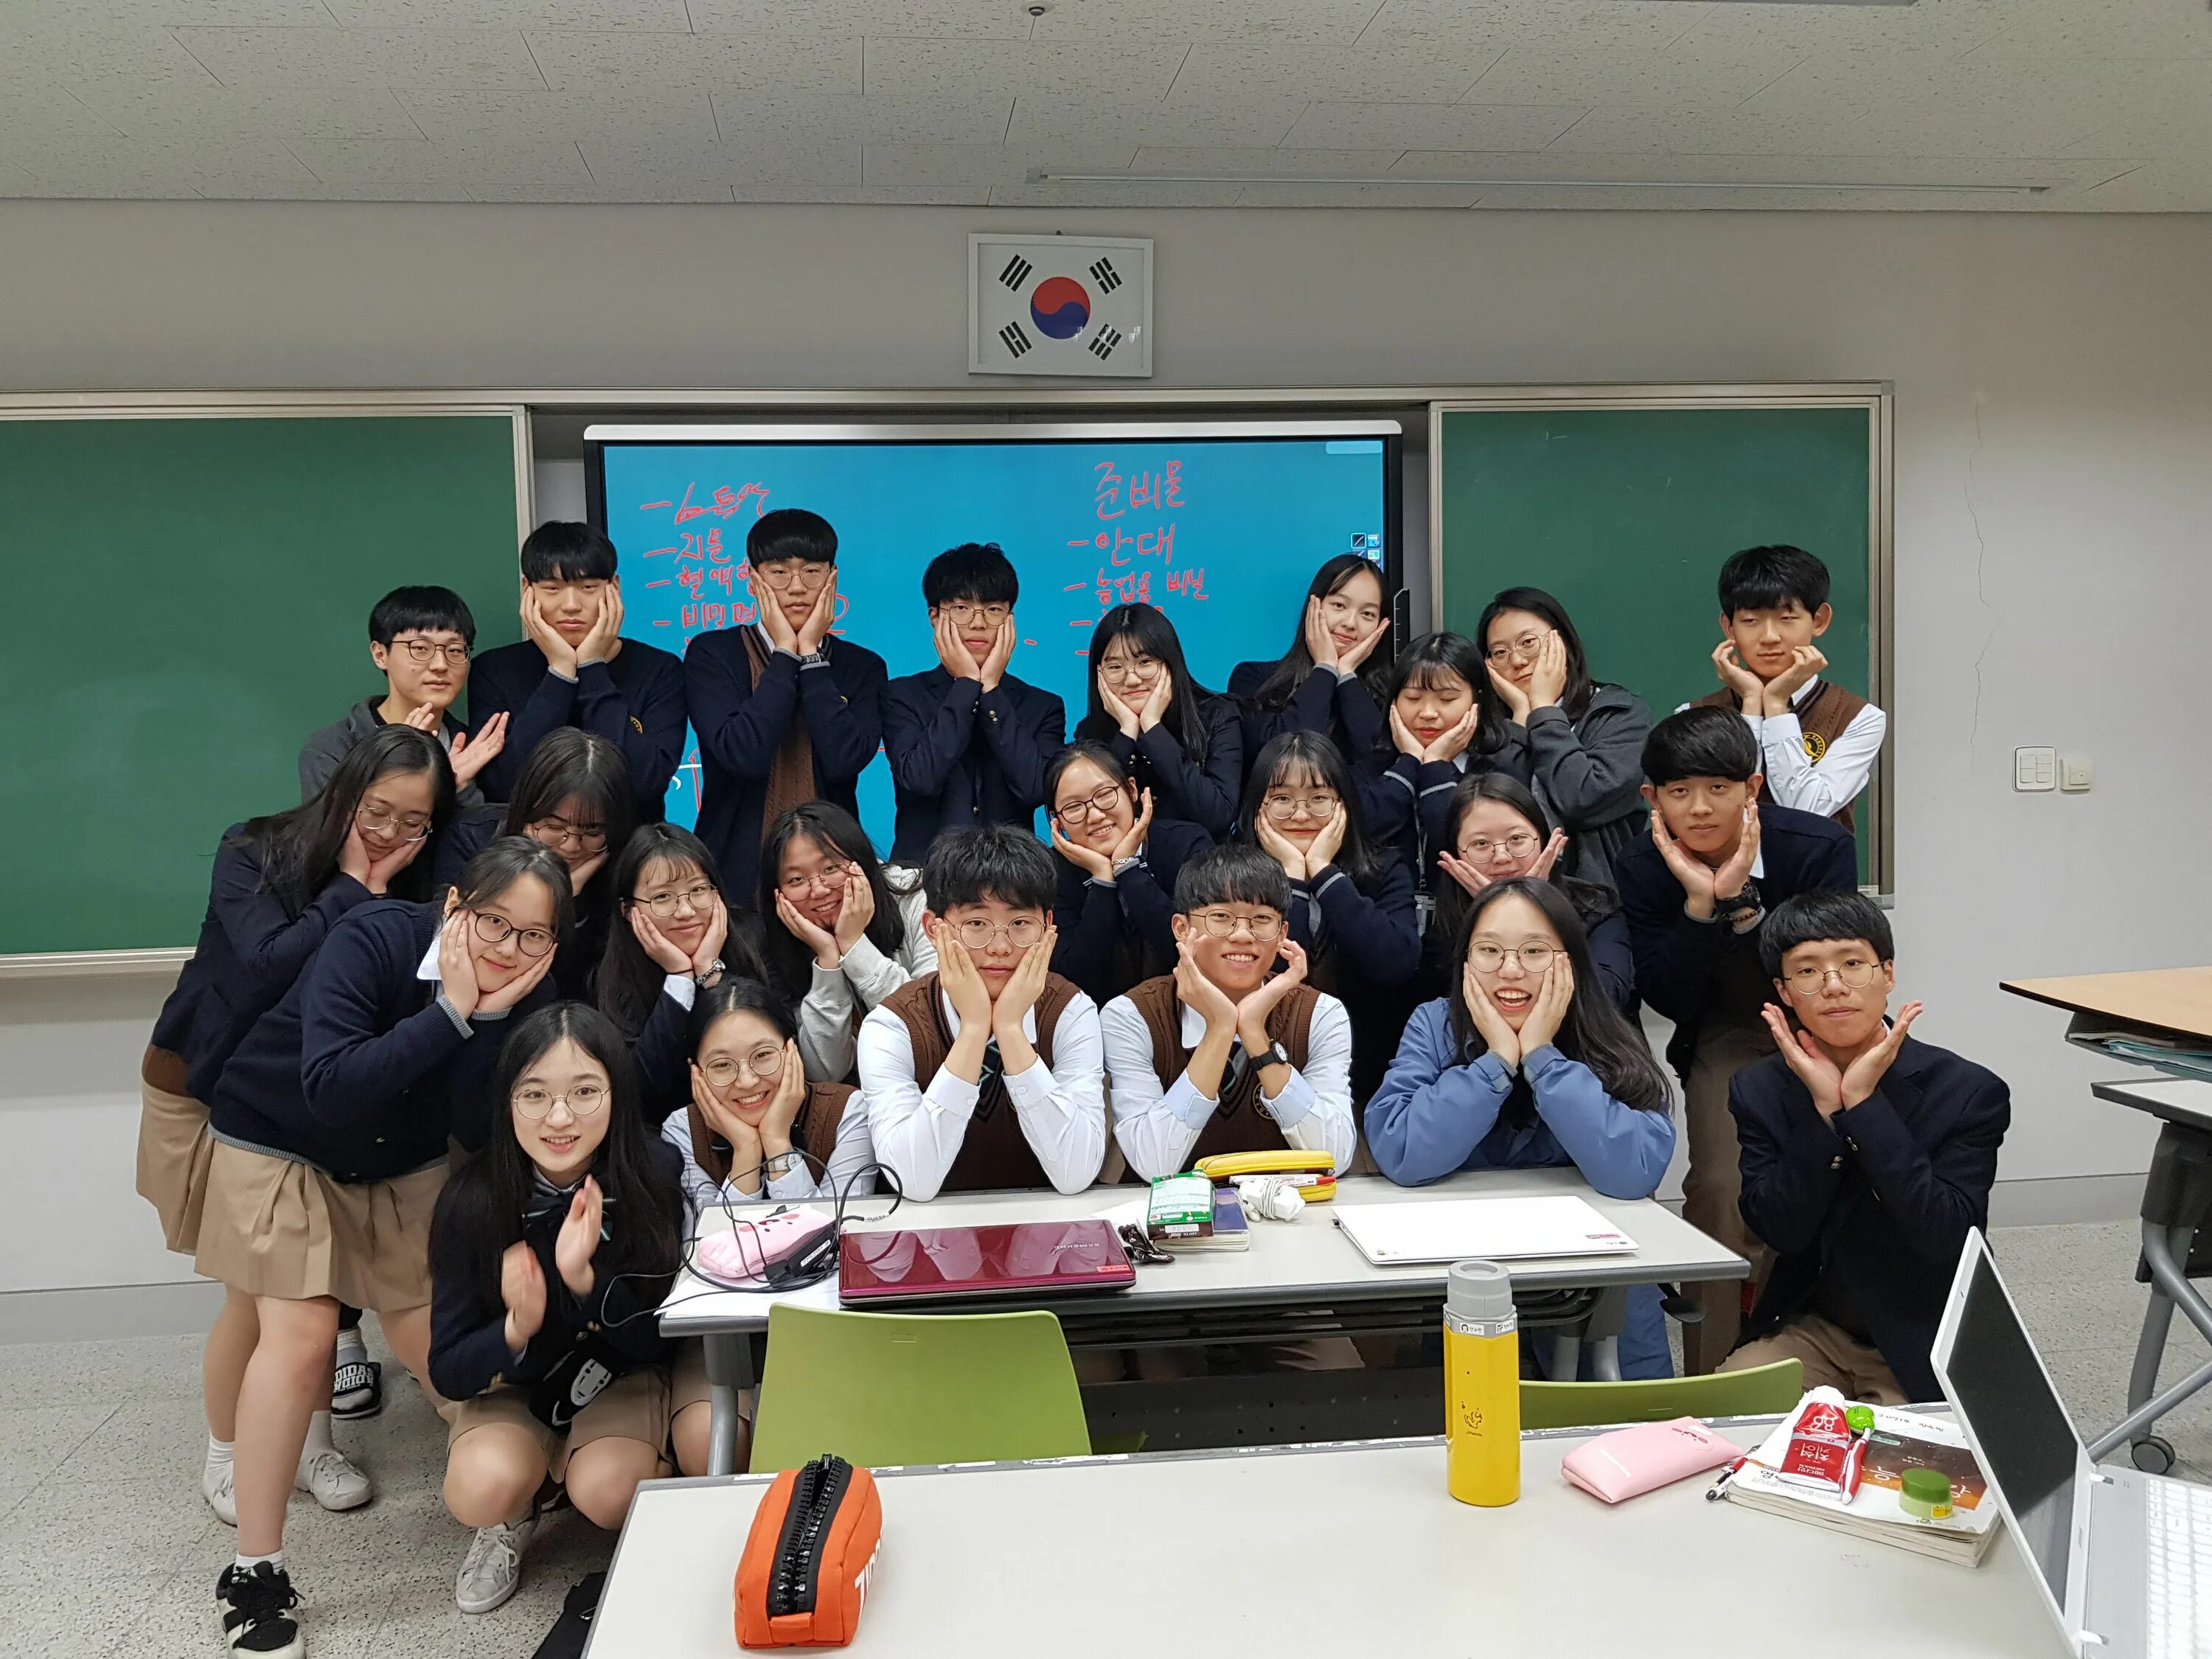 Школы Южной Кореи старшая школа. Старшая школа в Южной Корее. Средняя школа в Южной Корее. Ученики в Корее. Корейская старшая школа